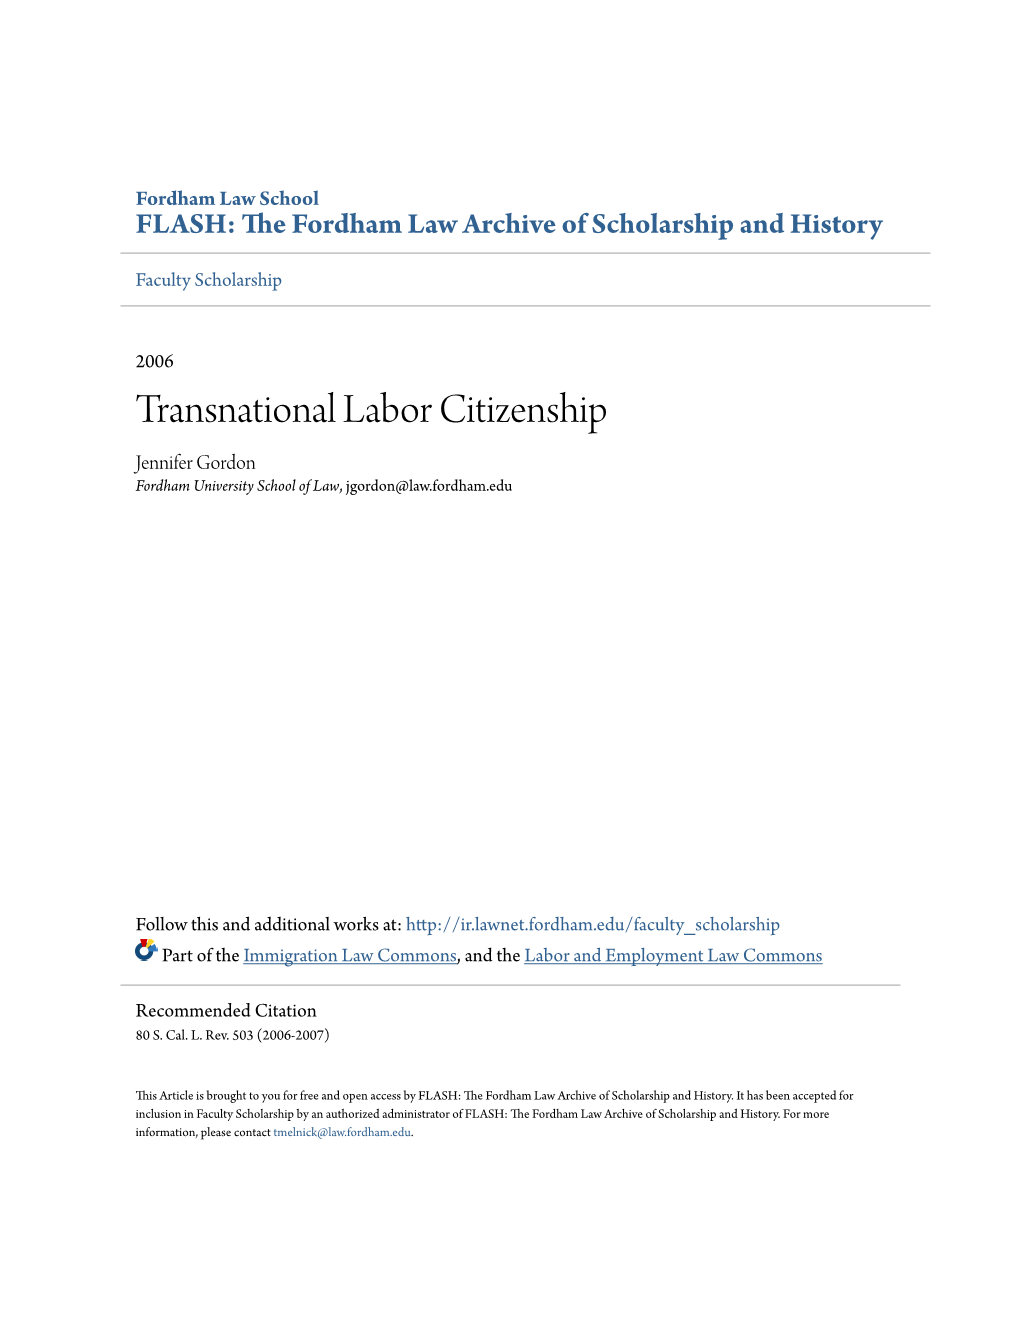 Transnational Labor Citizenship Jennifer Gordon Fordham University School of Law, Jgordon@Law.Fordham.Edu